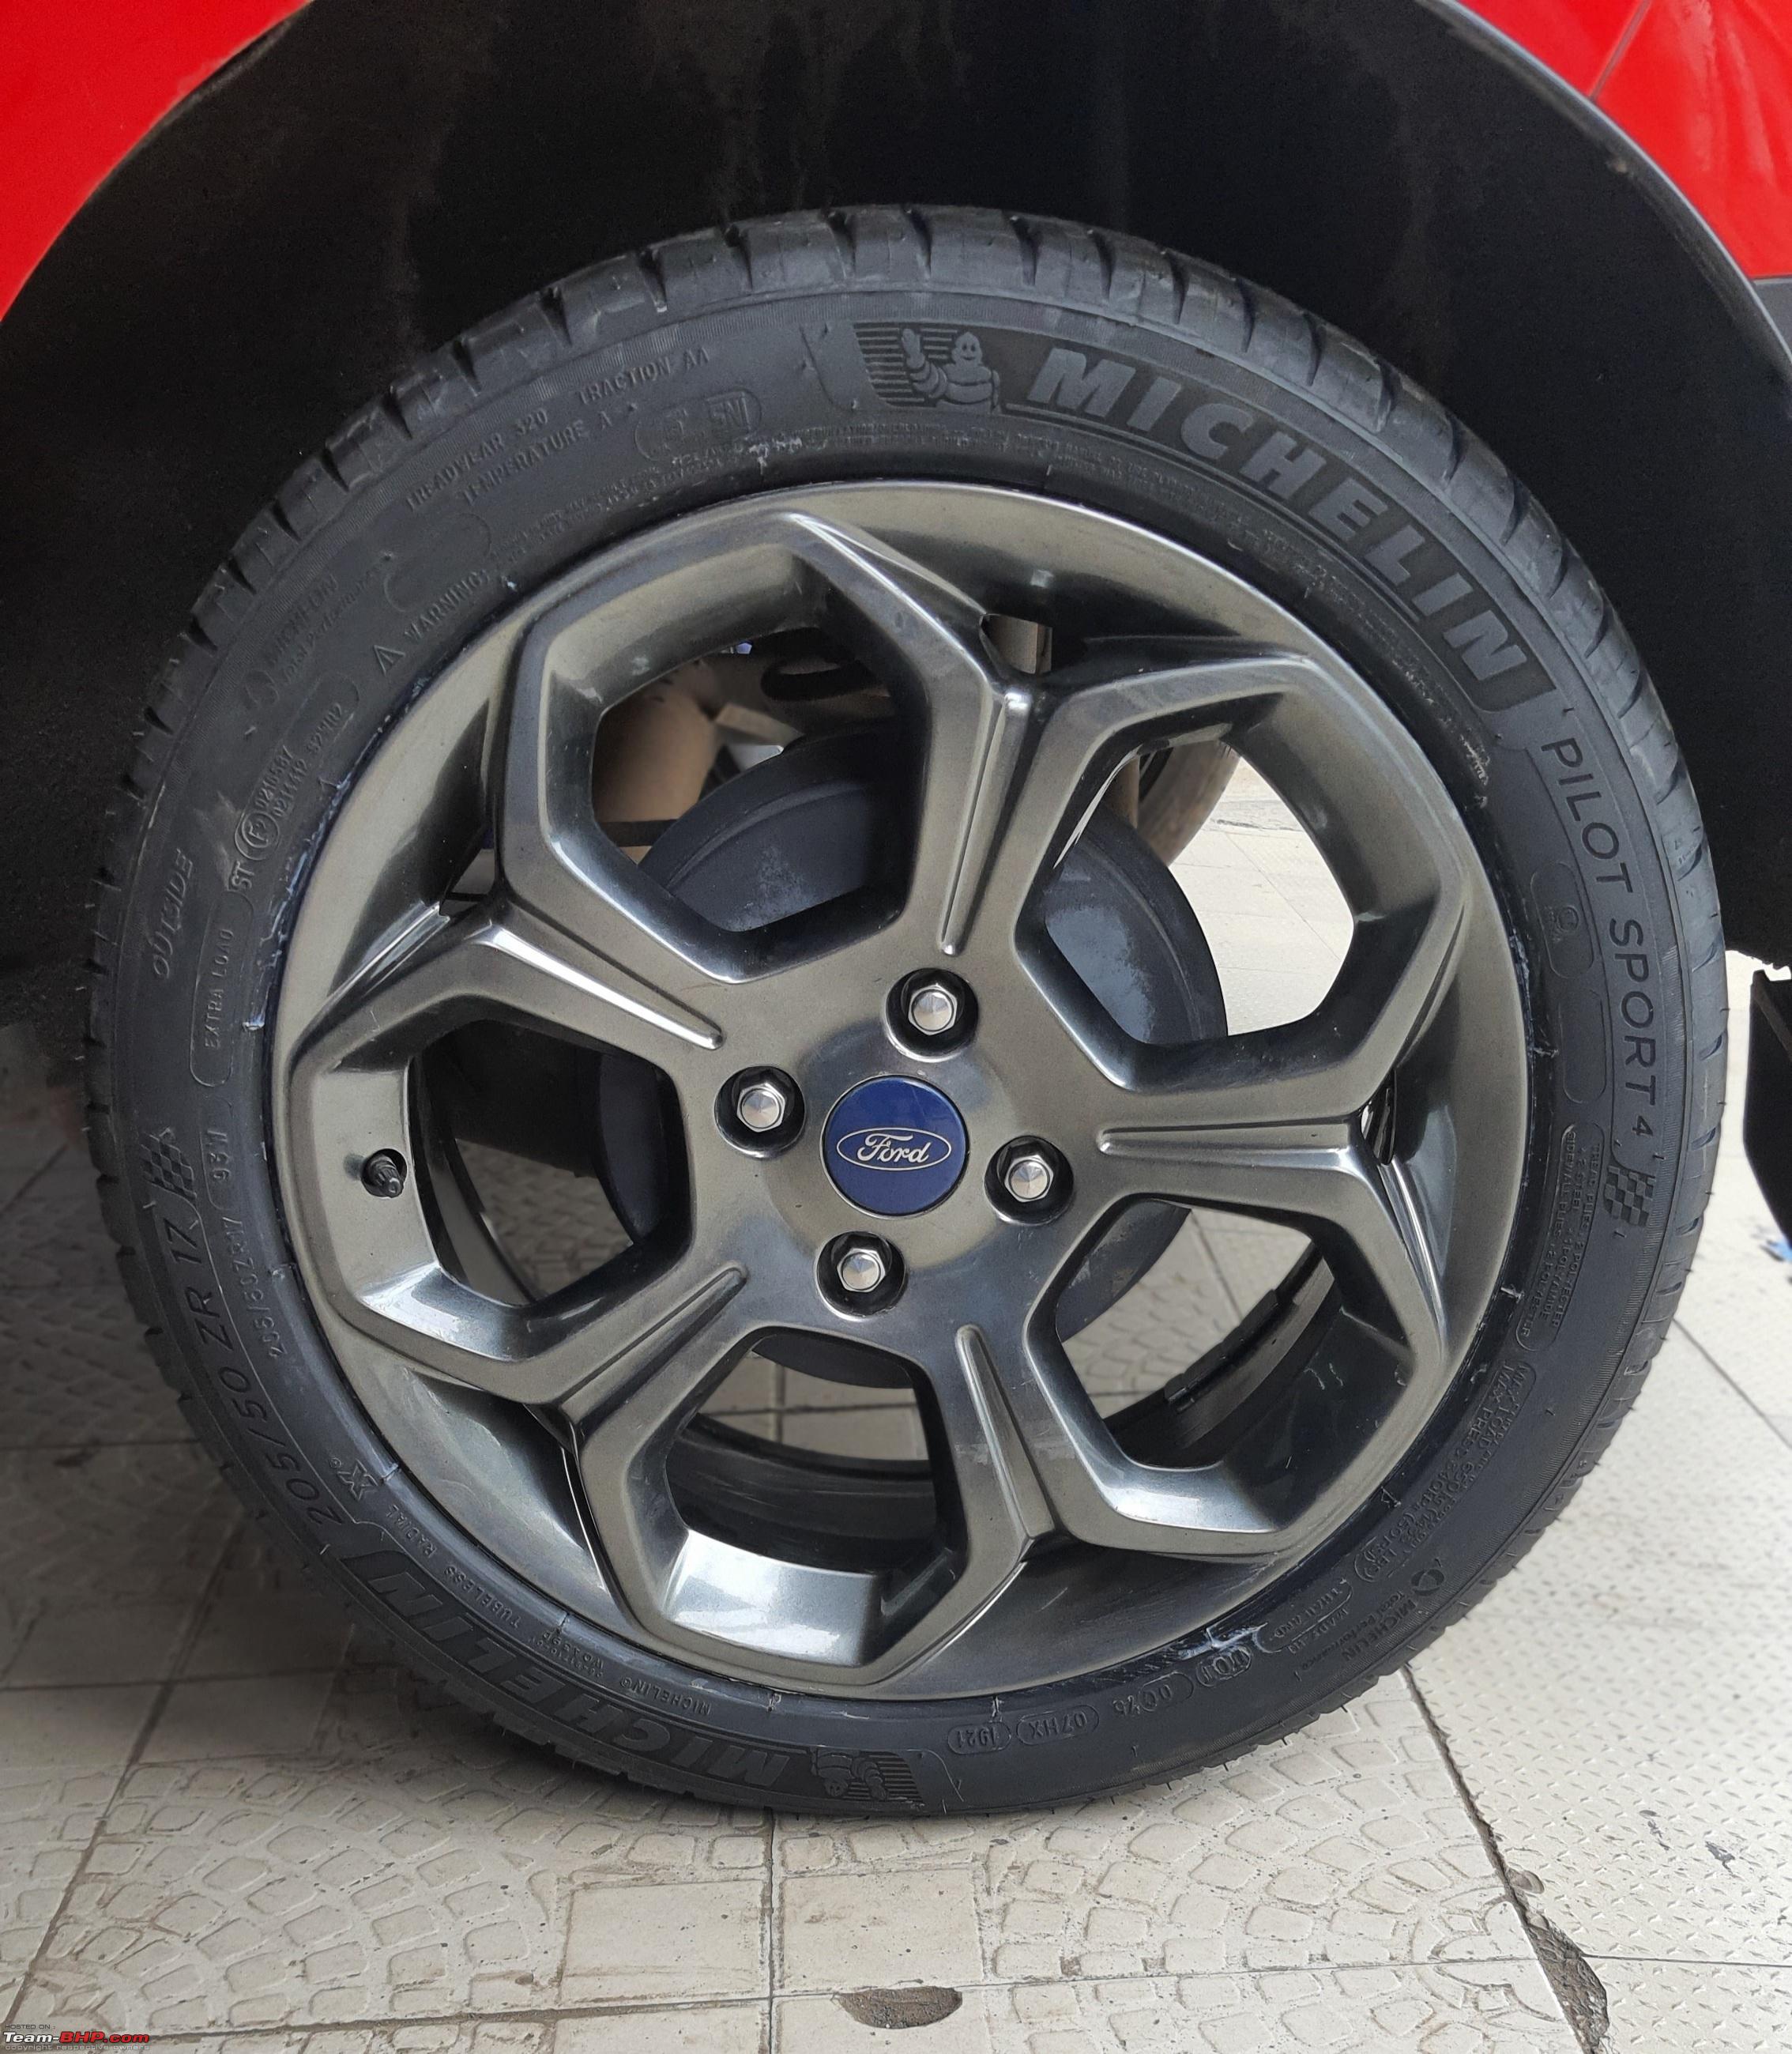 Ford Ecosport : Tyre & wheel upgrade thread - Page 25 - Team-BHP